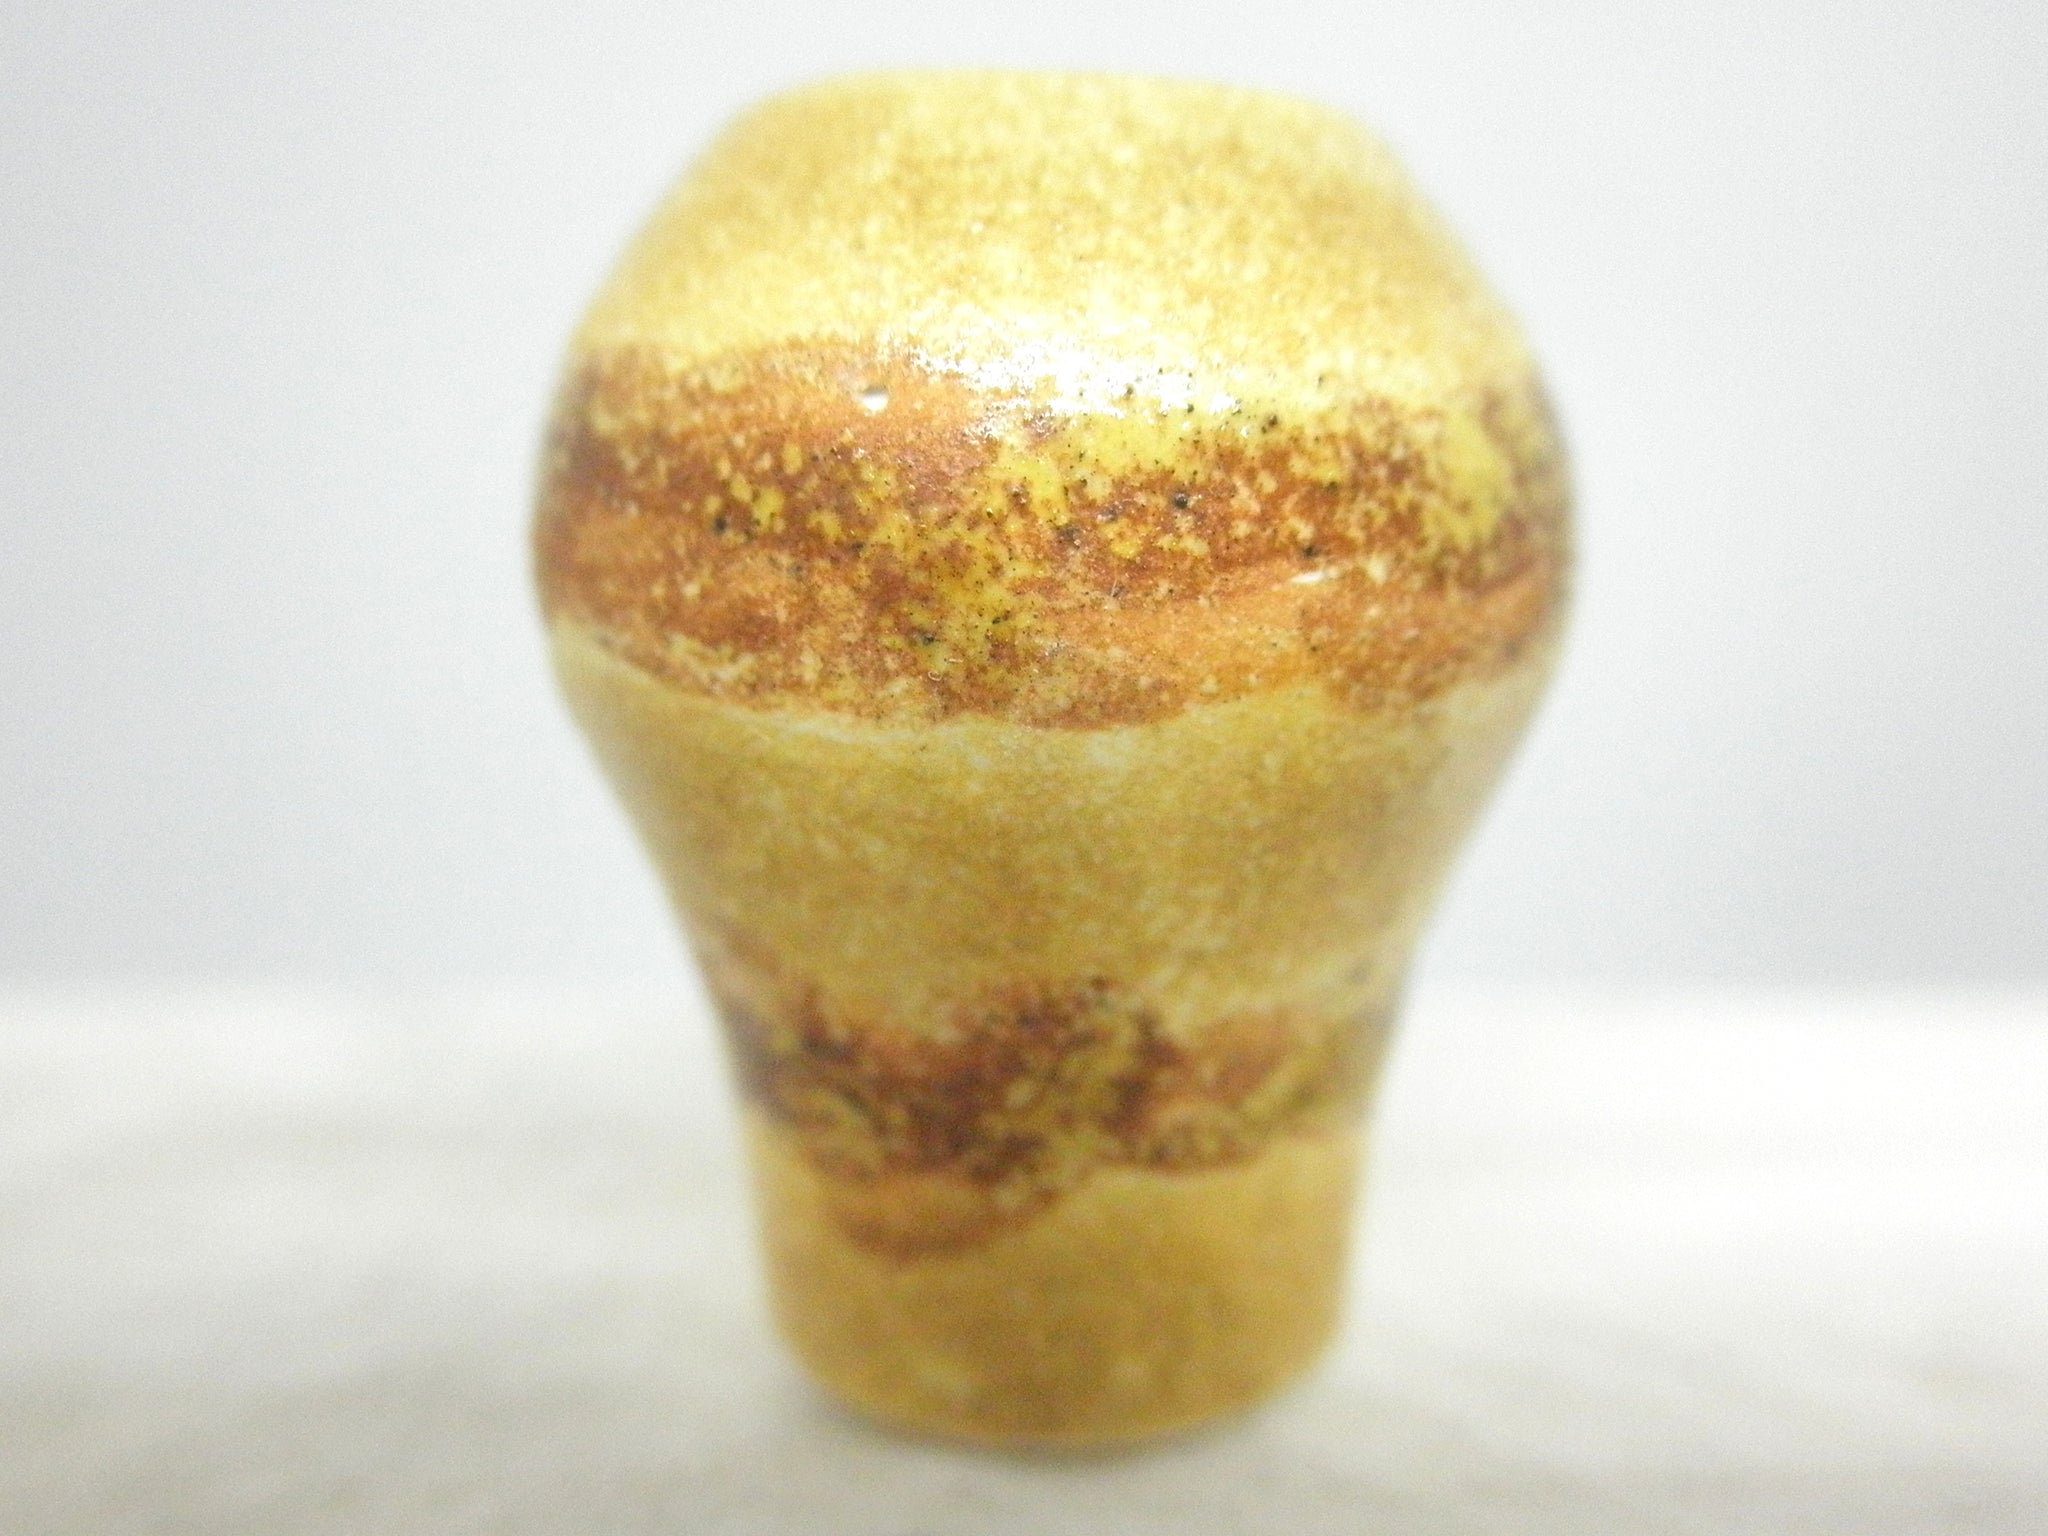 Dollhouse Miniature earth tones vase